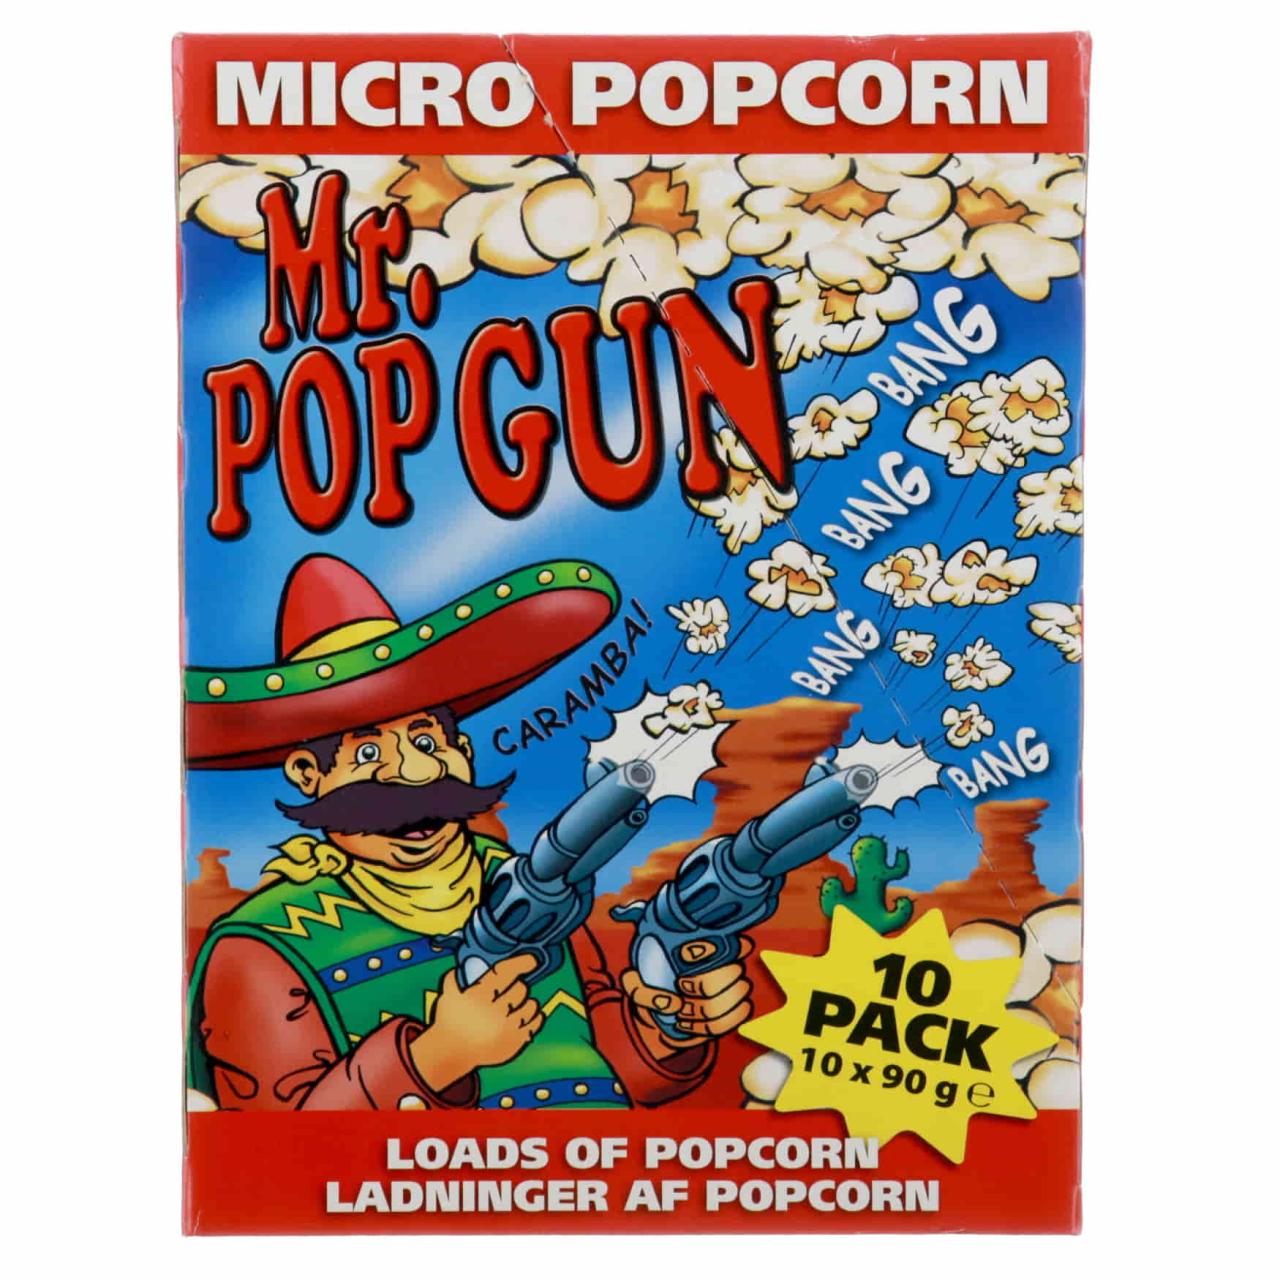 Mr. Popgun Micro Popcorn 10x90g